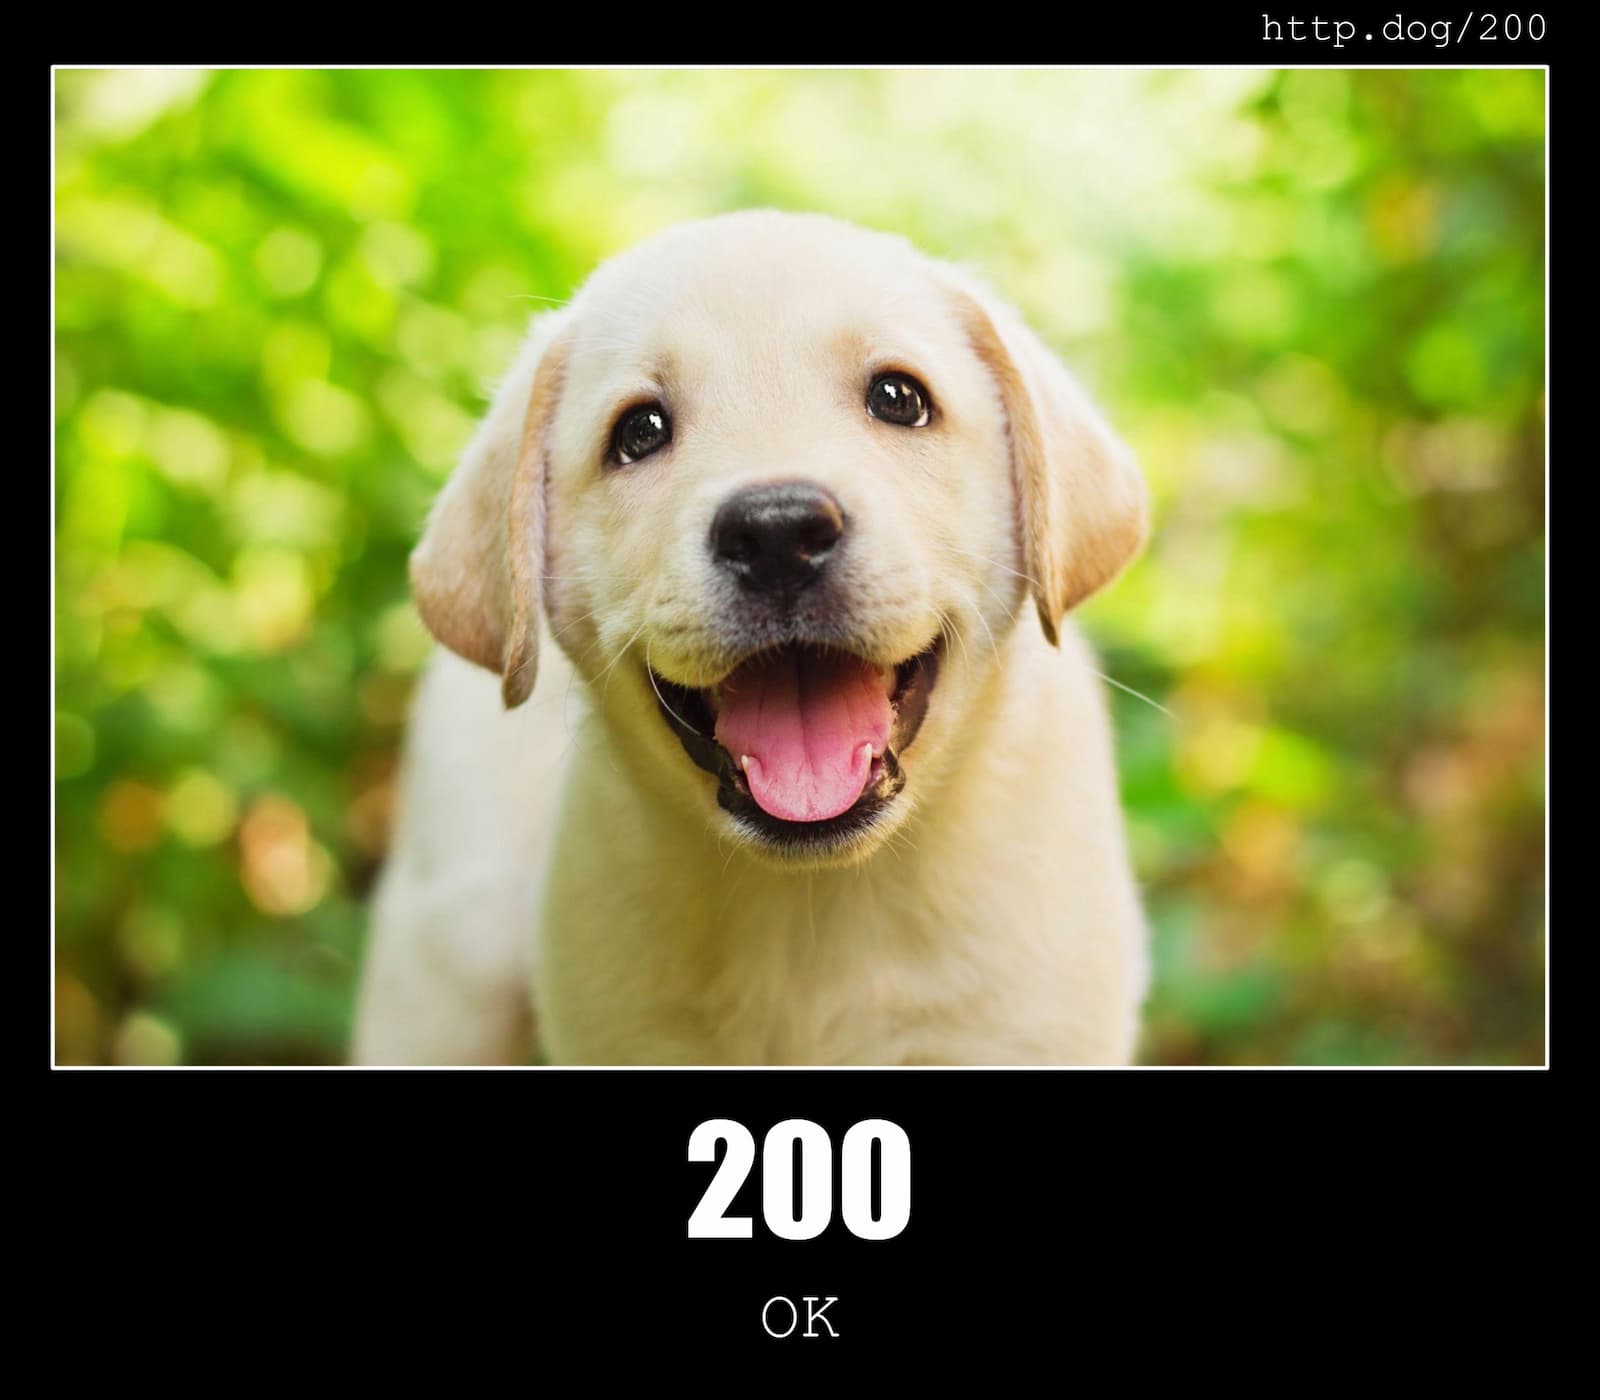 HTTP Status Code 200 OK & Dogs